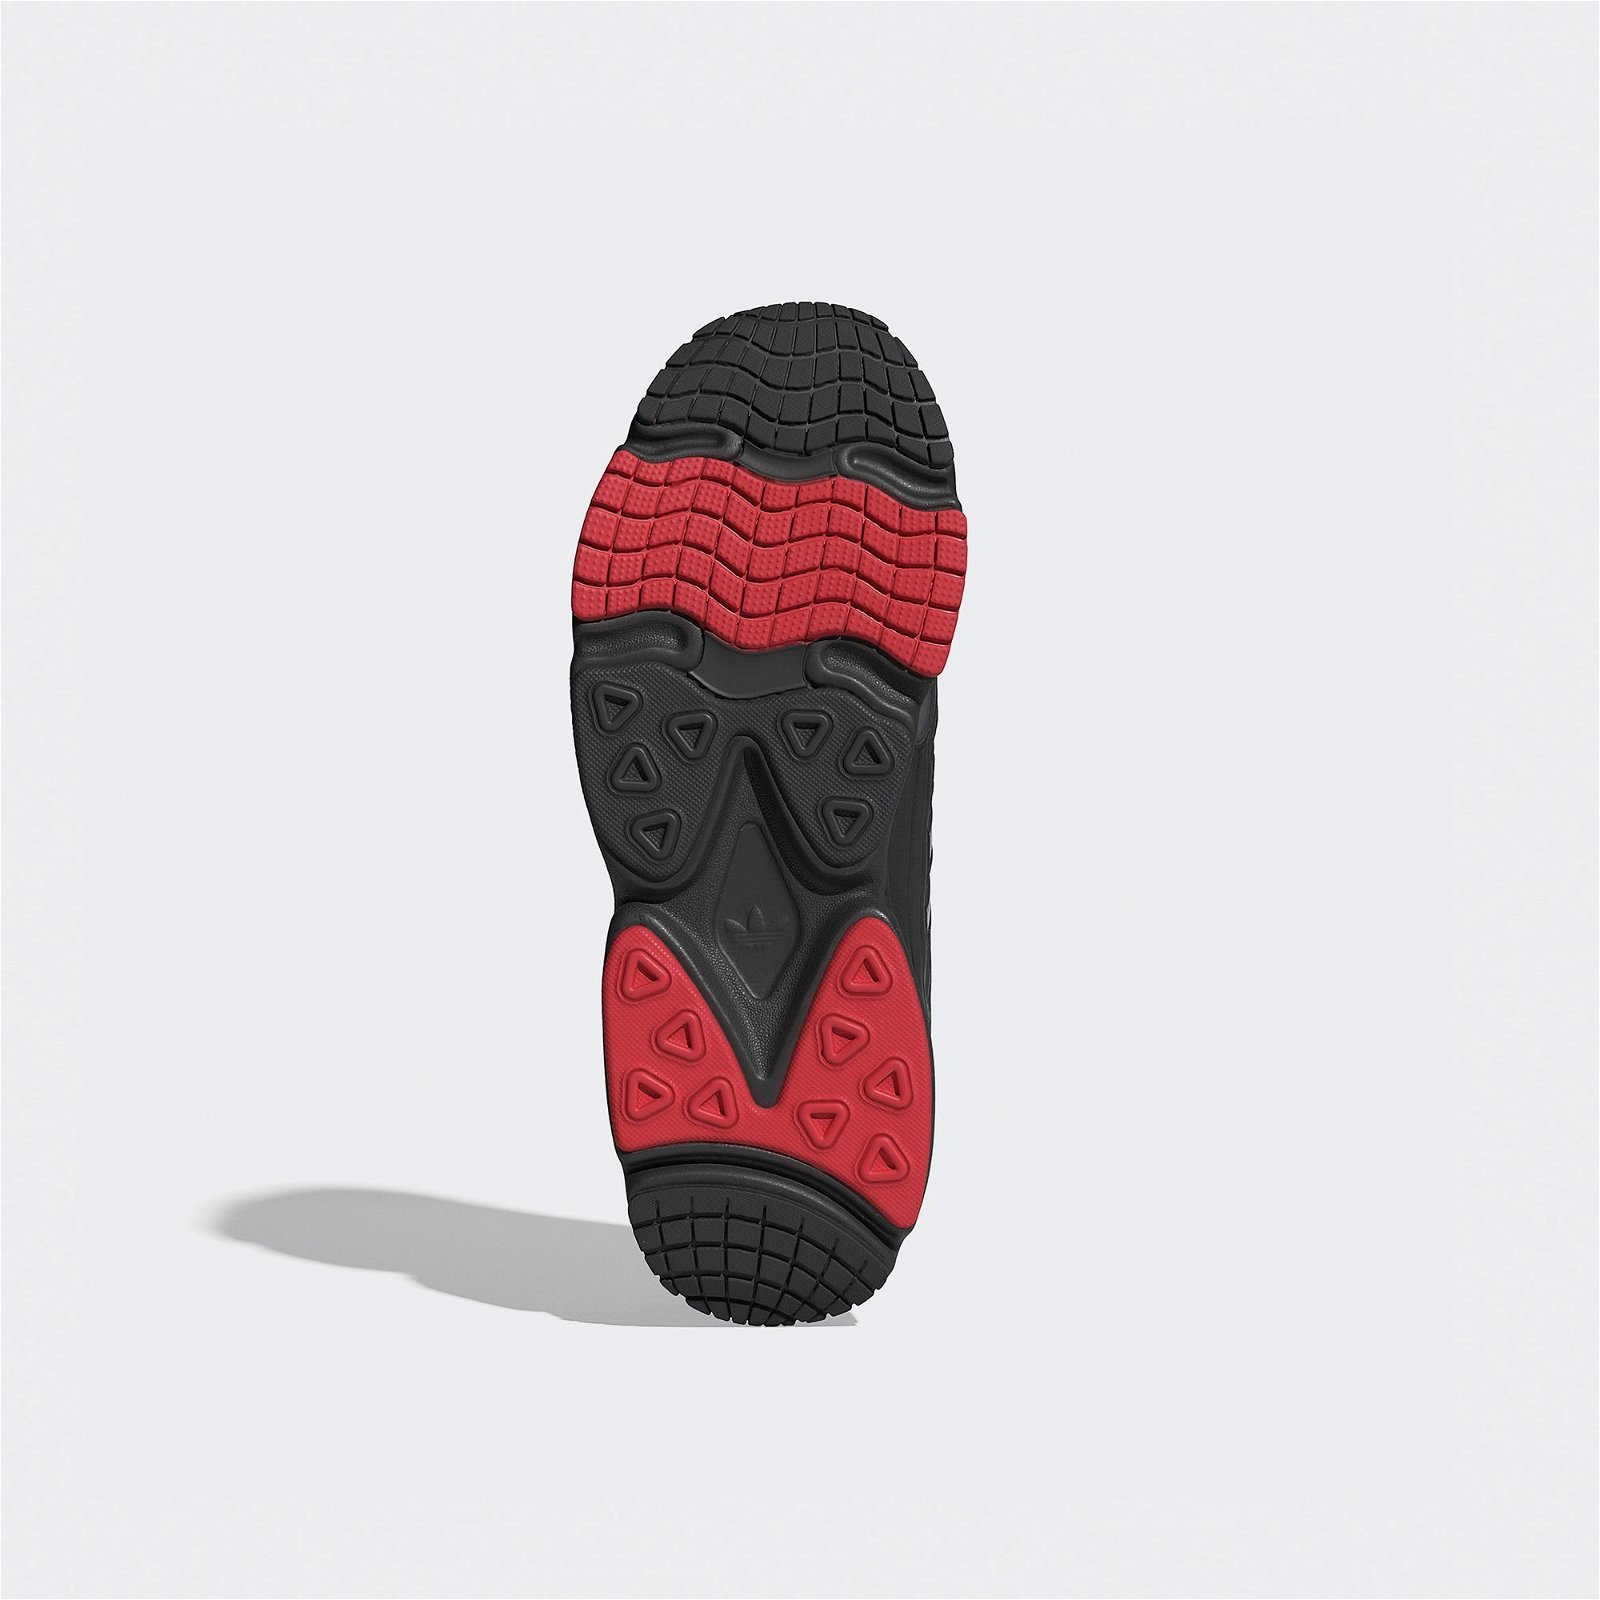 adidas Originals Ozmillen Erkek Siyah Spor Ayakkabı